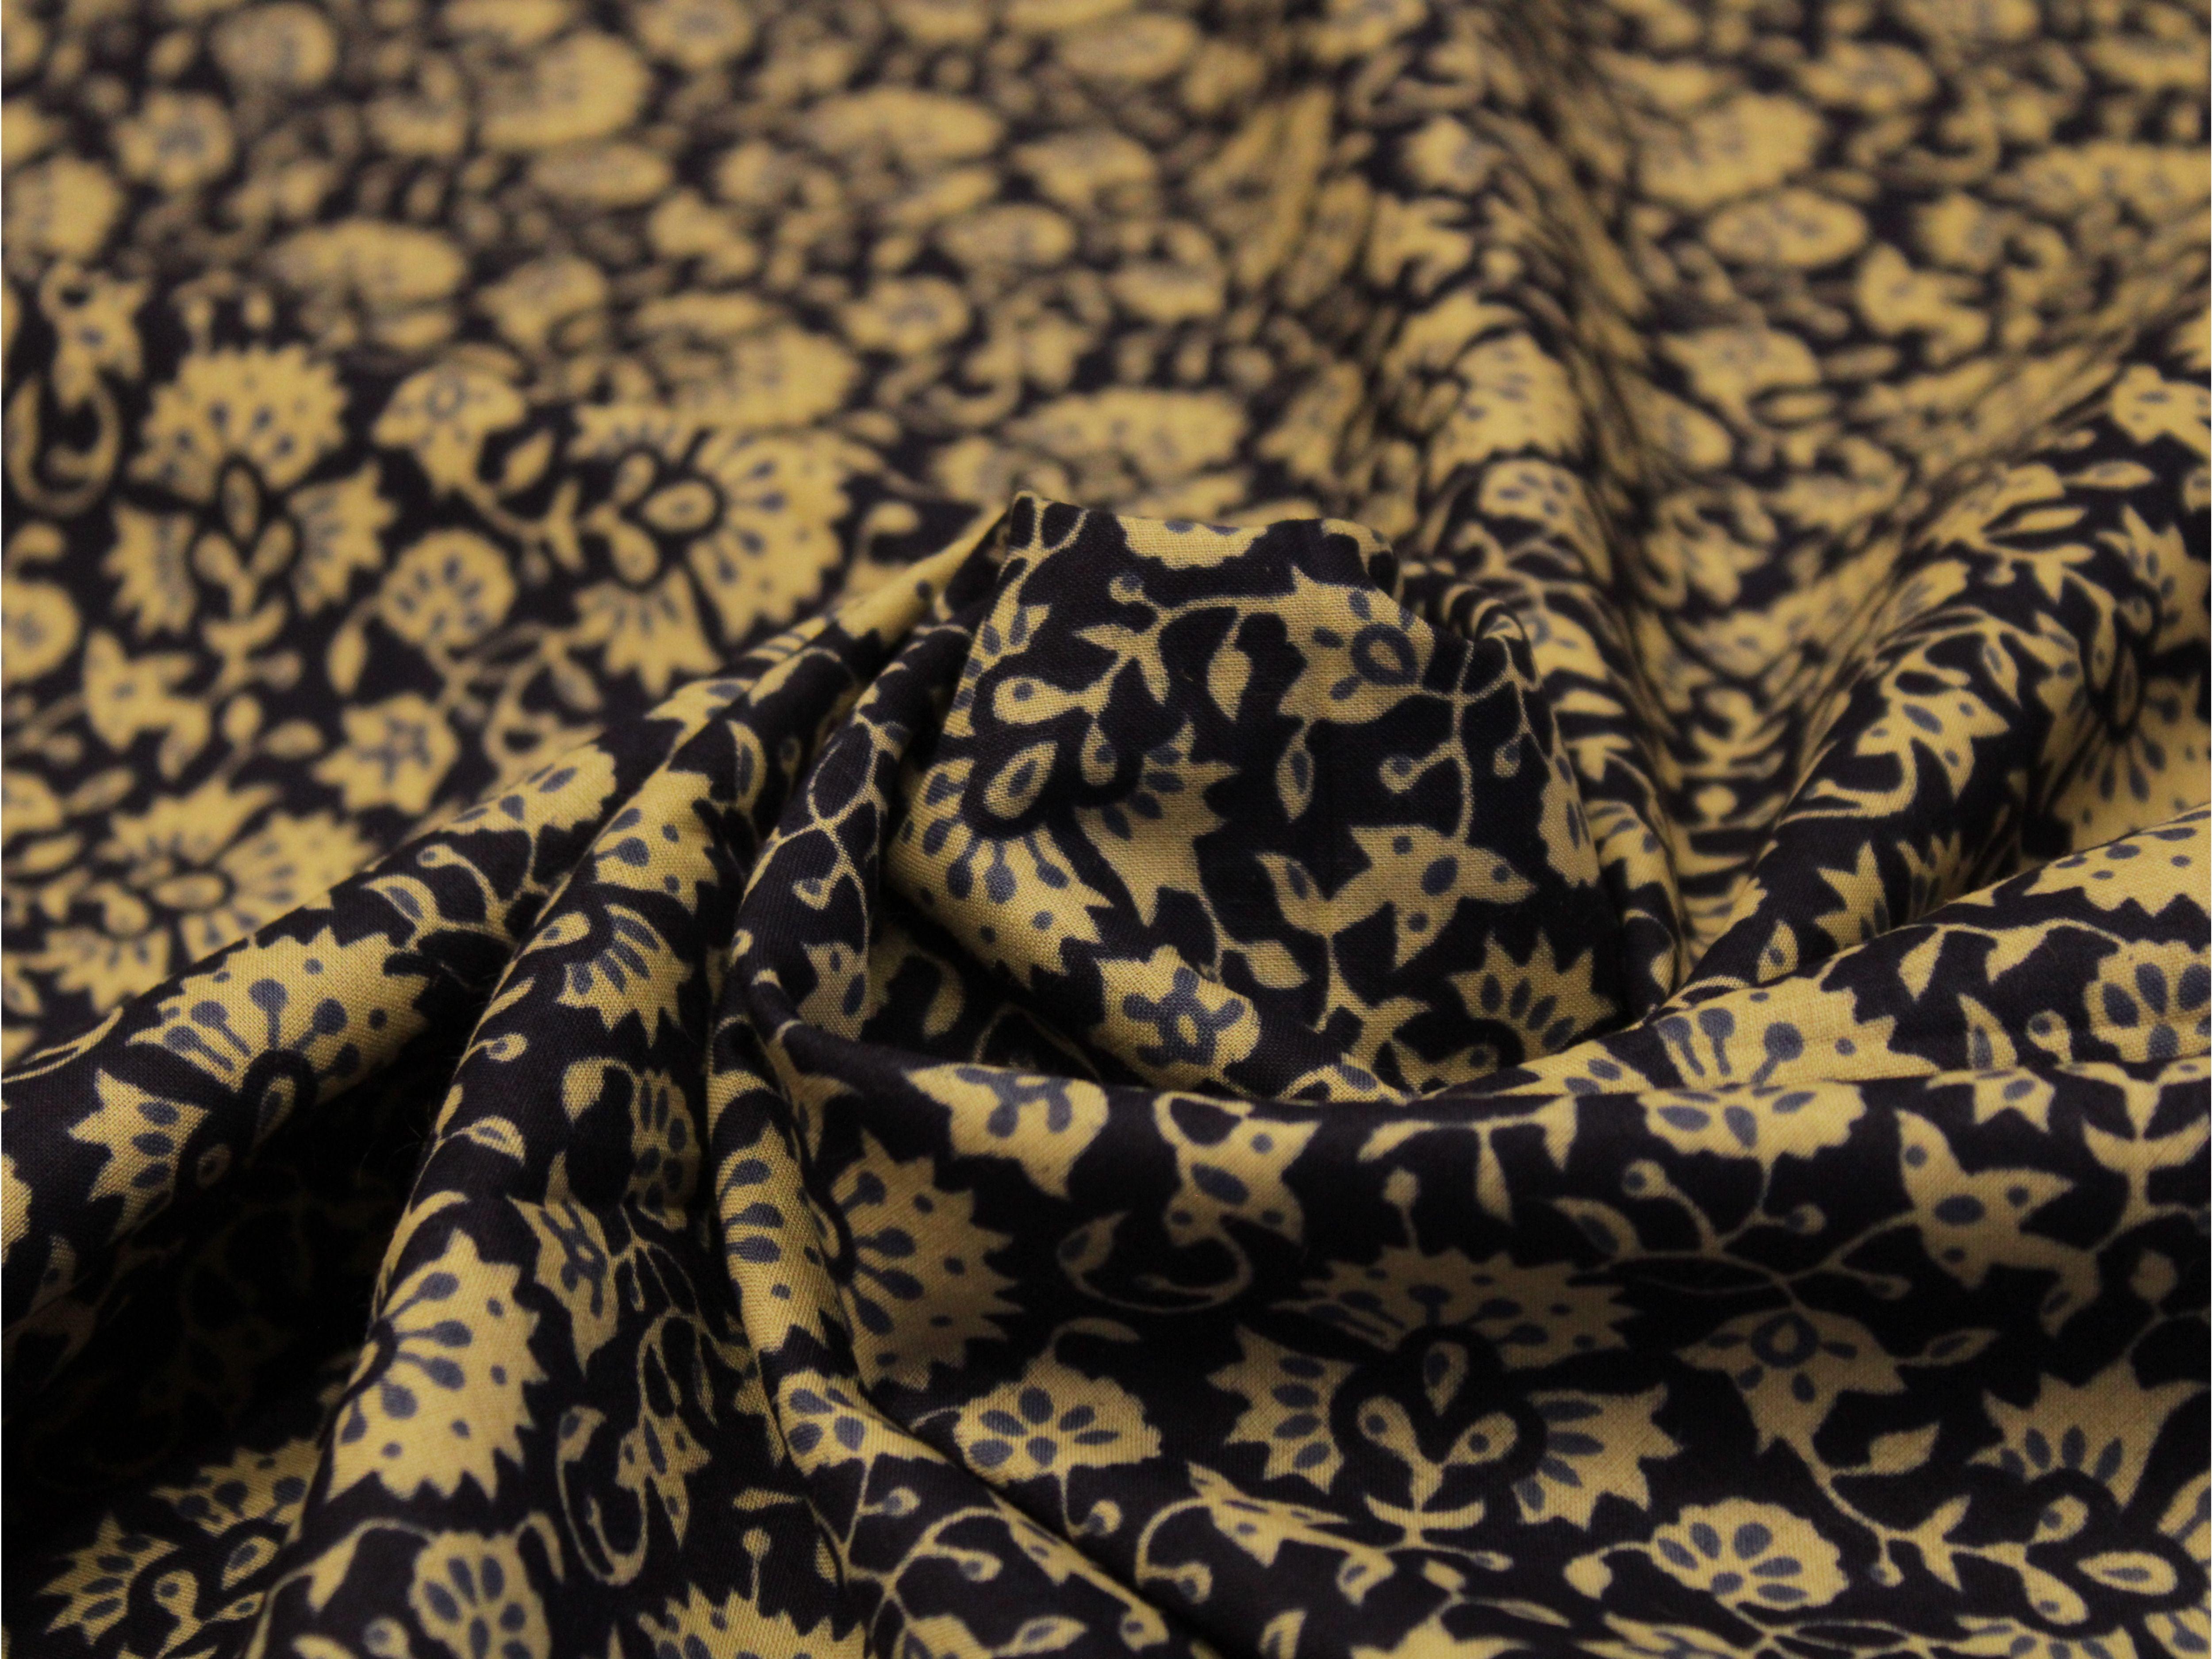 Euphoric - Cotton Printed Fabric by M'Foks - M'Foks